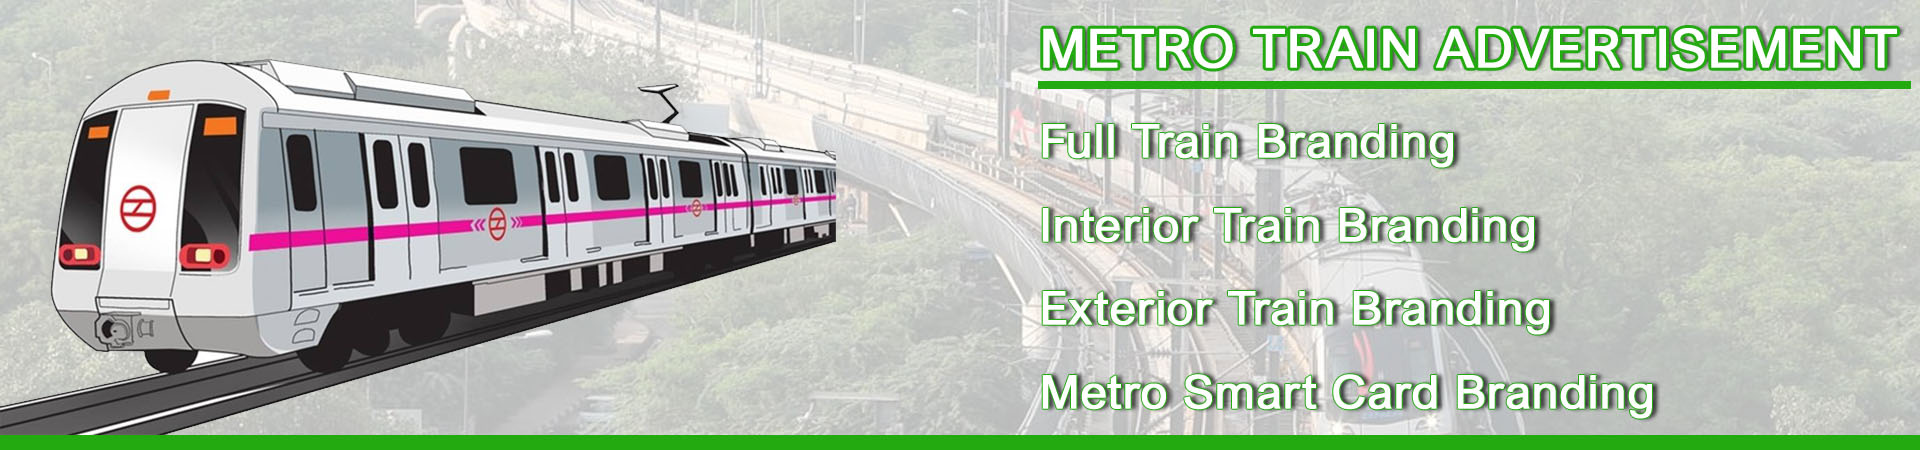 Metro Train Branding